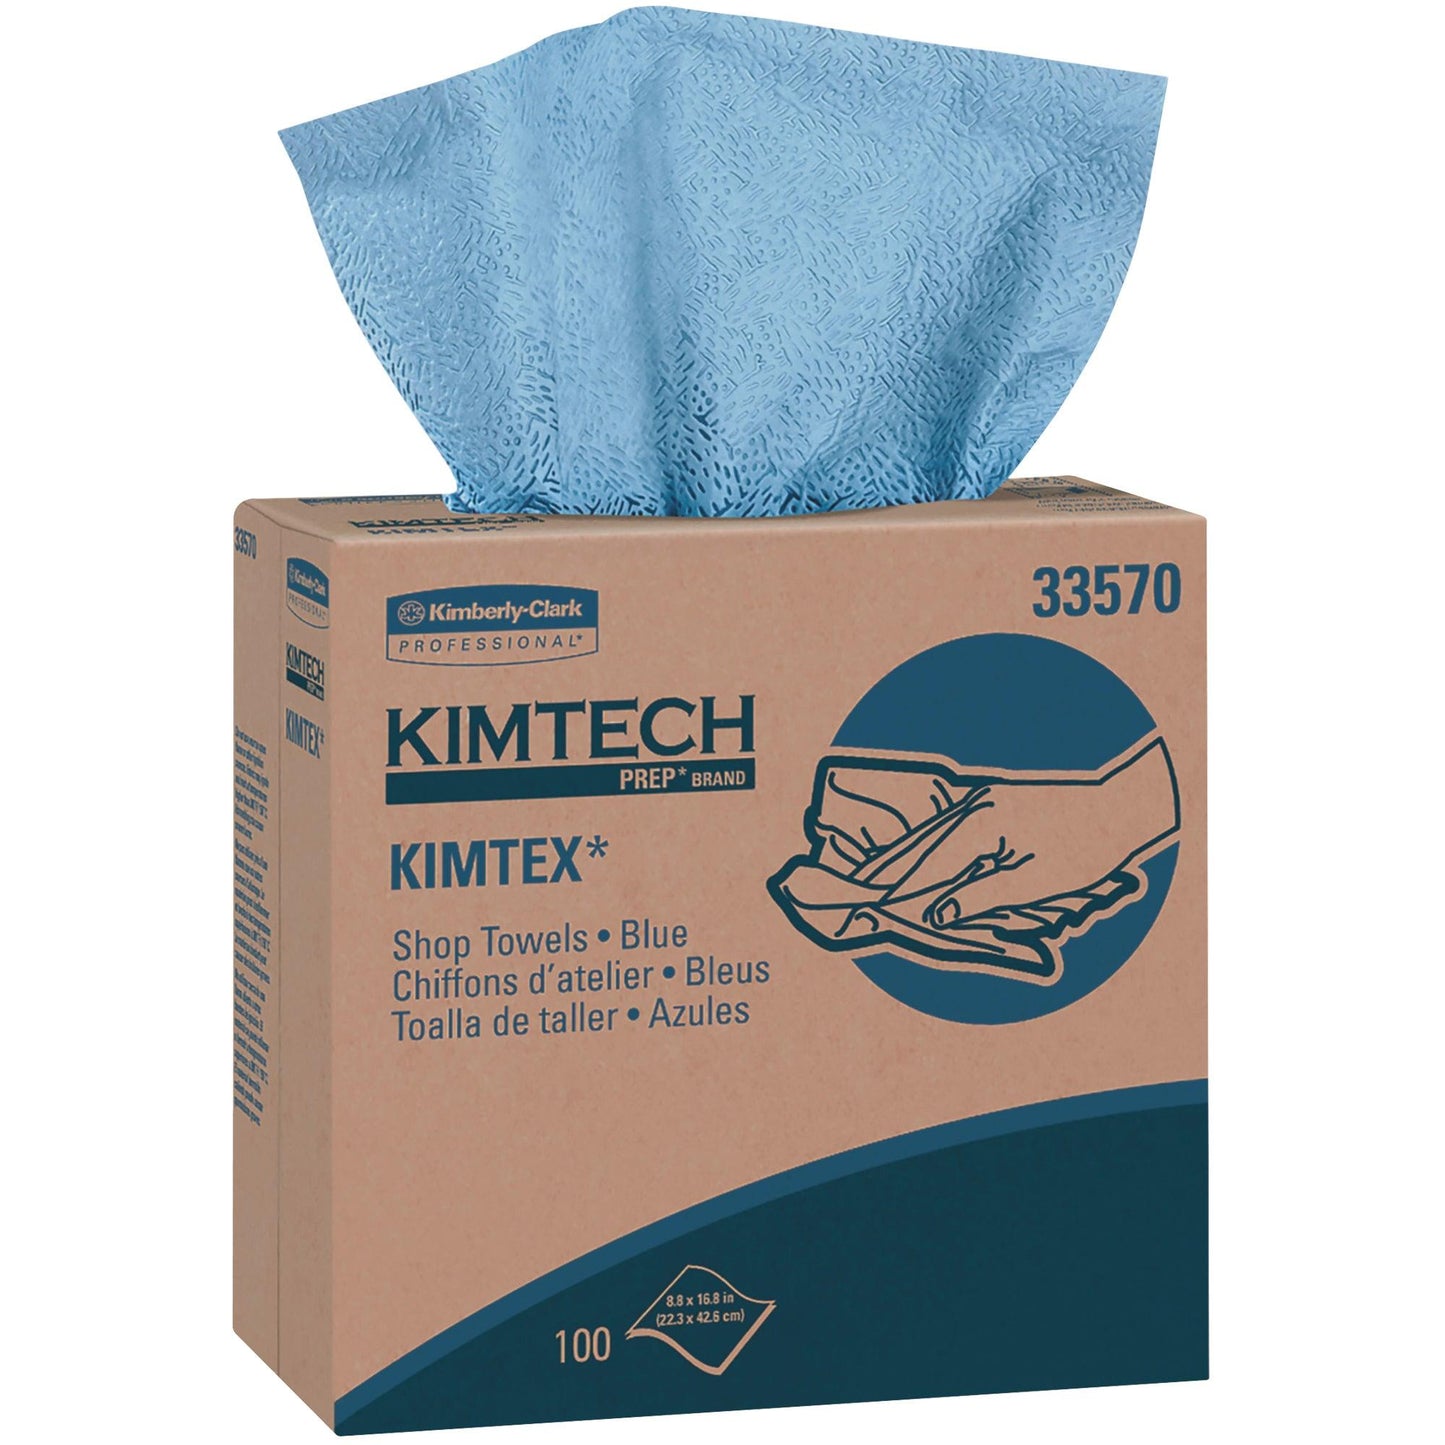 Kimtech® Wipers Pop-Up Box - KW157